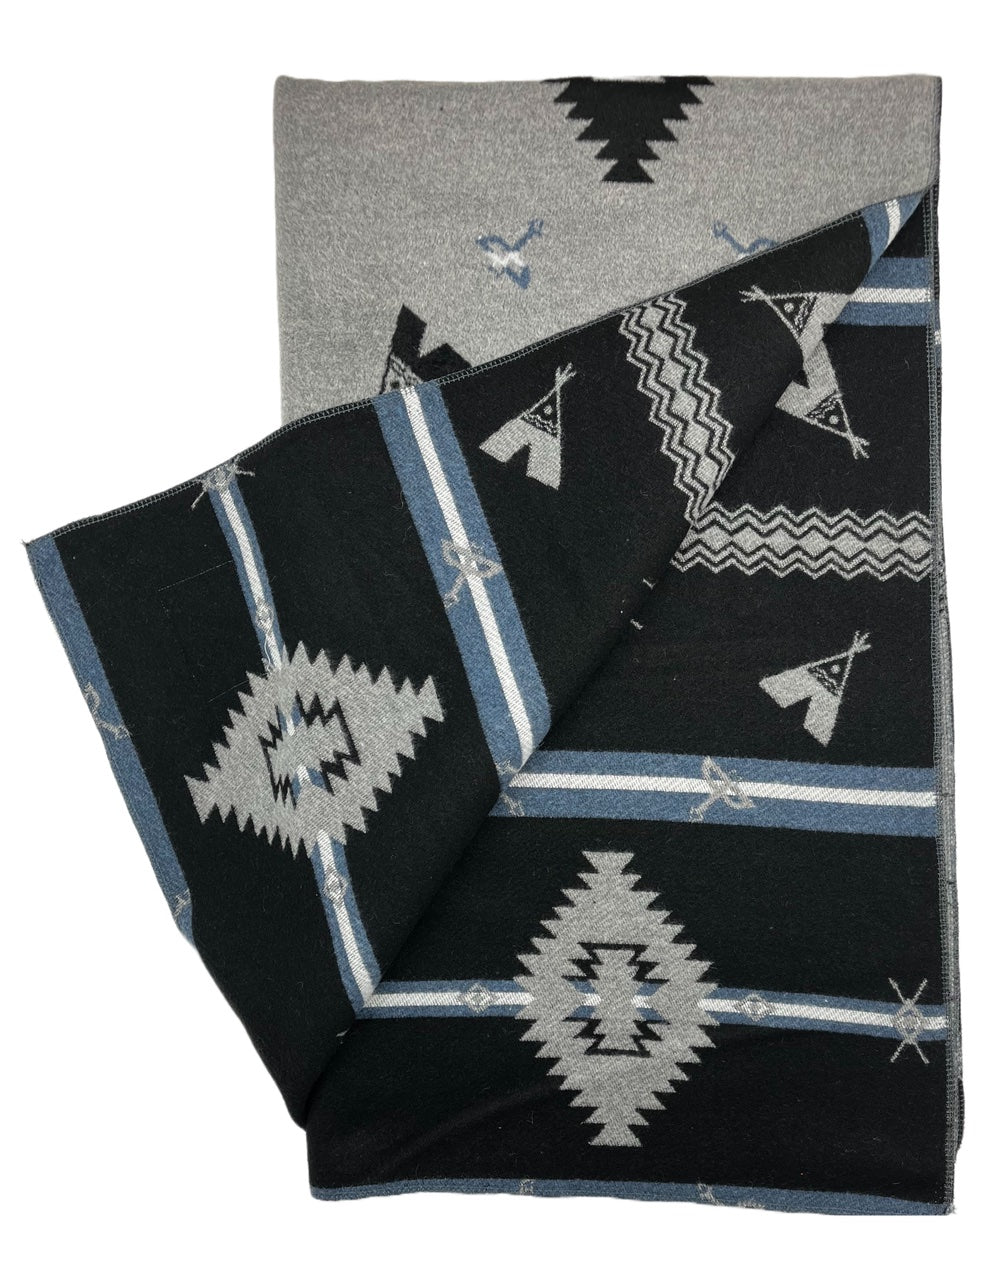 Buffalo Cross Premium Blanket – Teepee Grey